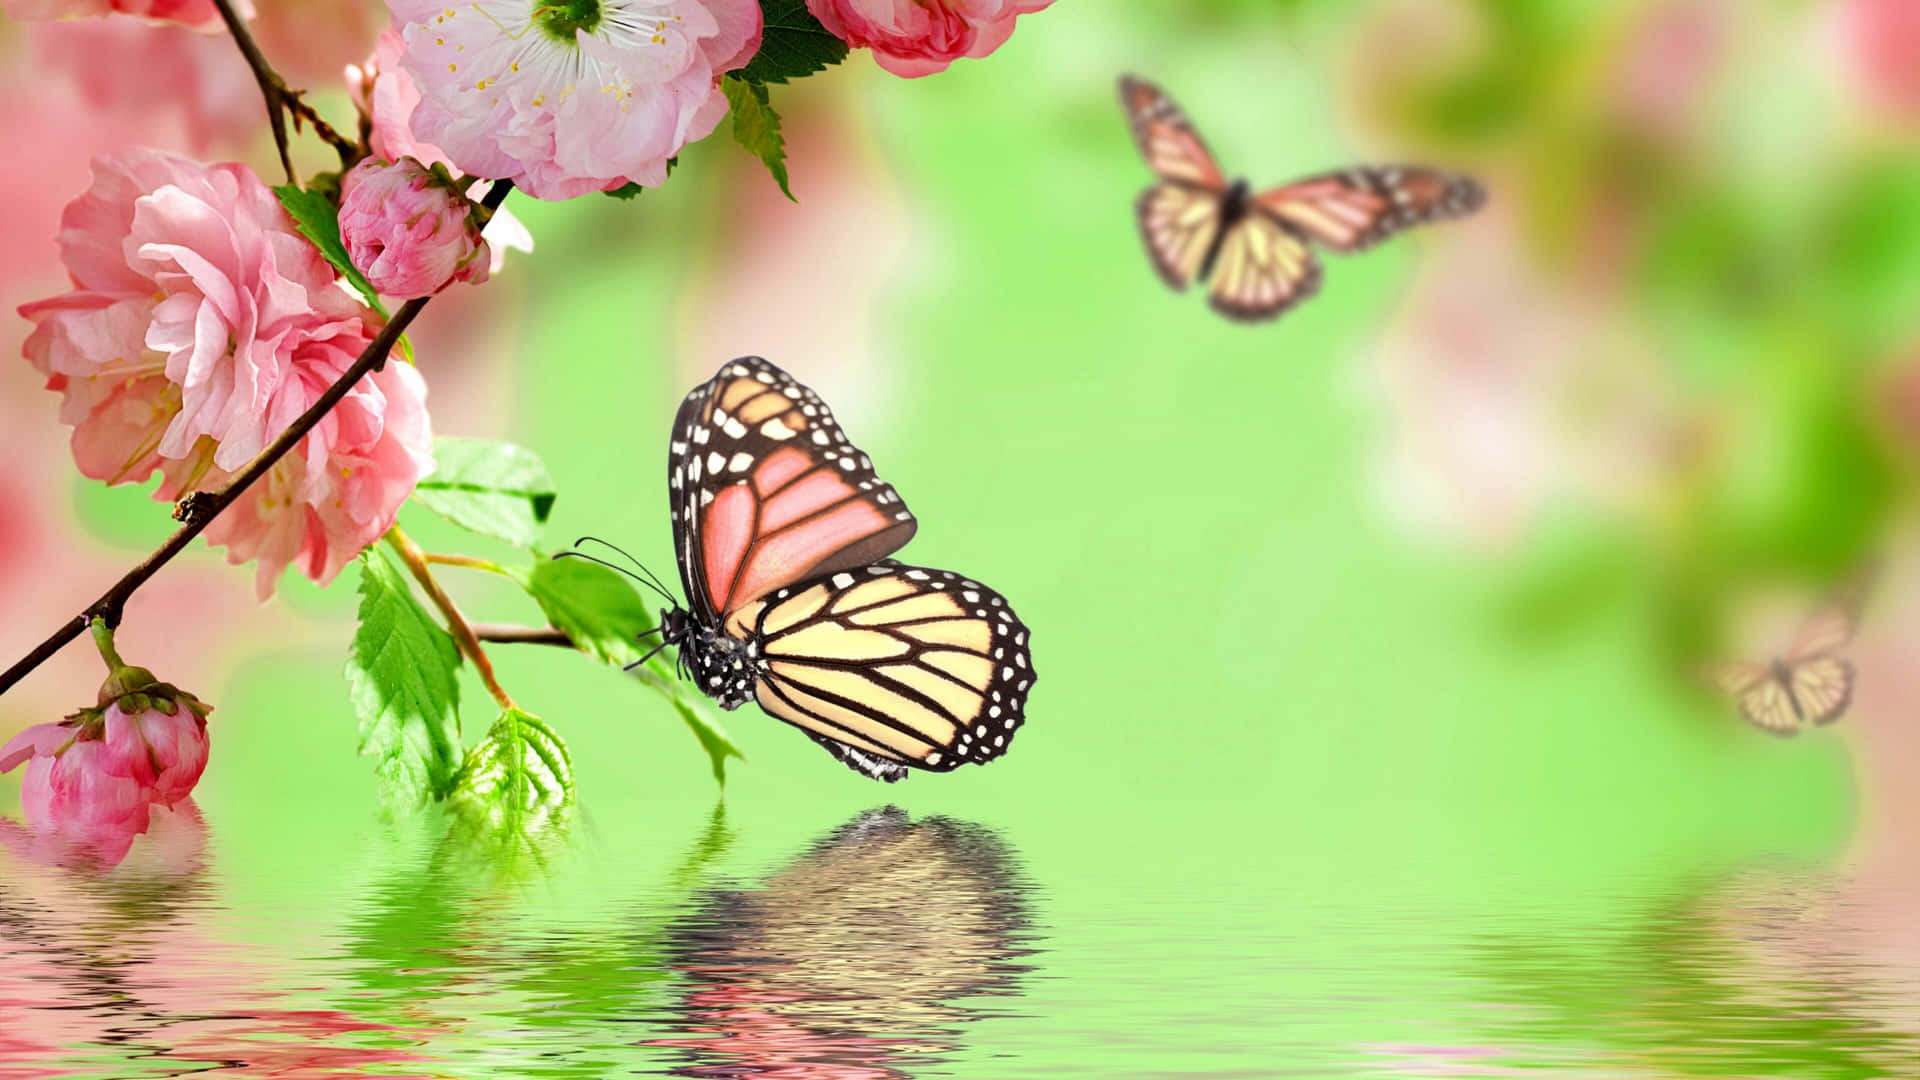 "Beautiful Butterflies in Our Butterfly Garden" Wallpaper